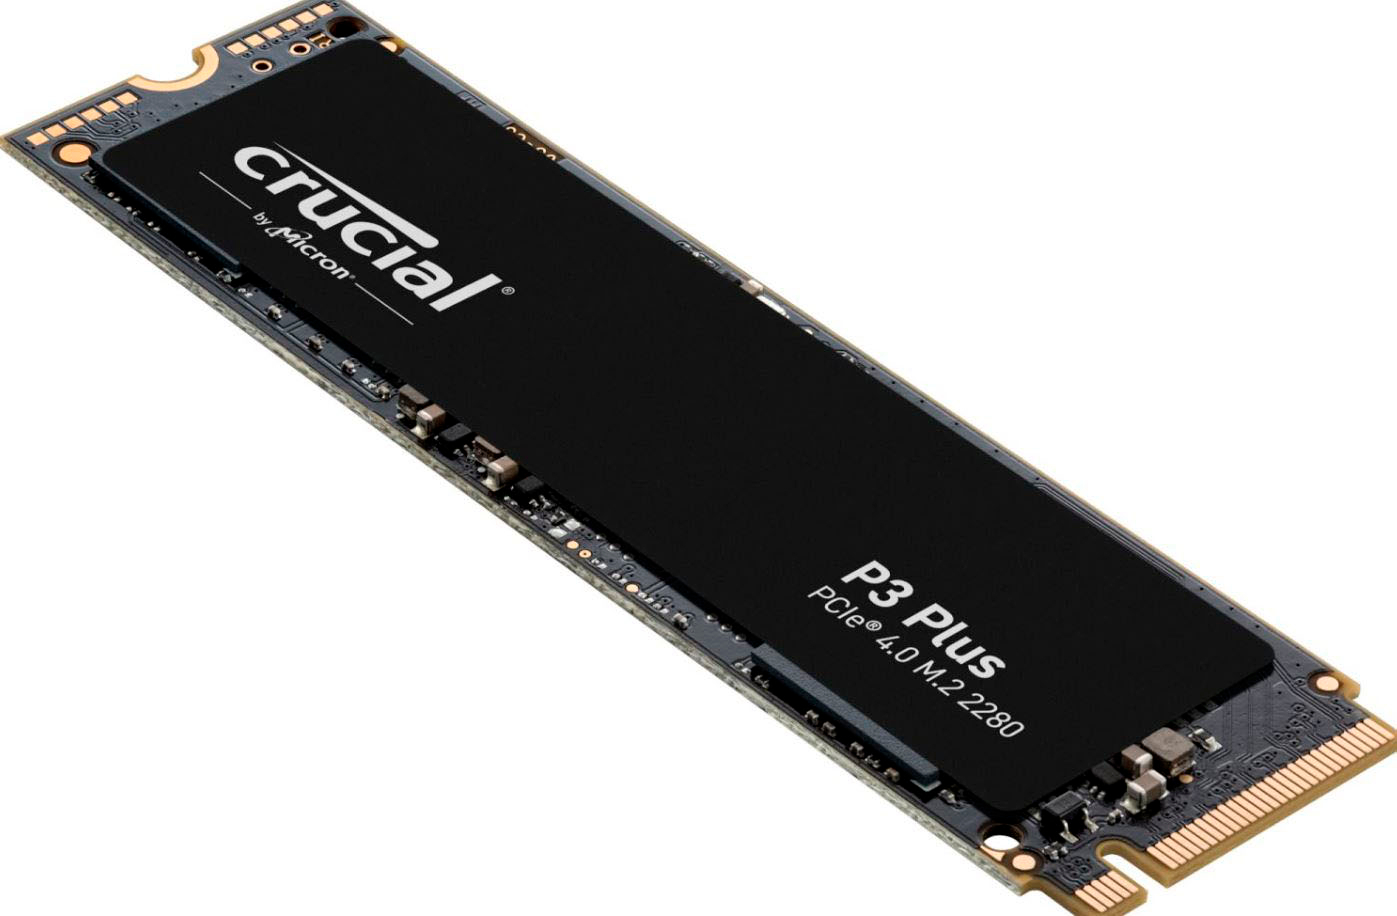 Crucial P3 Plus 4TB M.2 2280 PCIe NVMe Internal SSD CT4000P3PSSD8 (READ)  649528918857